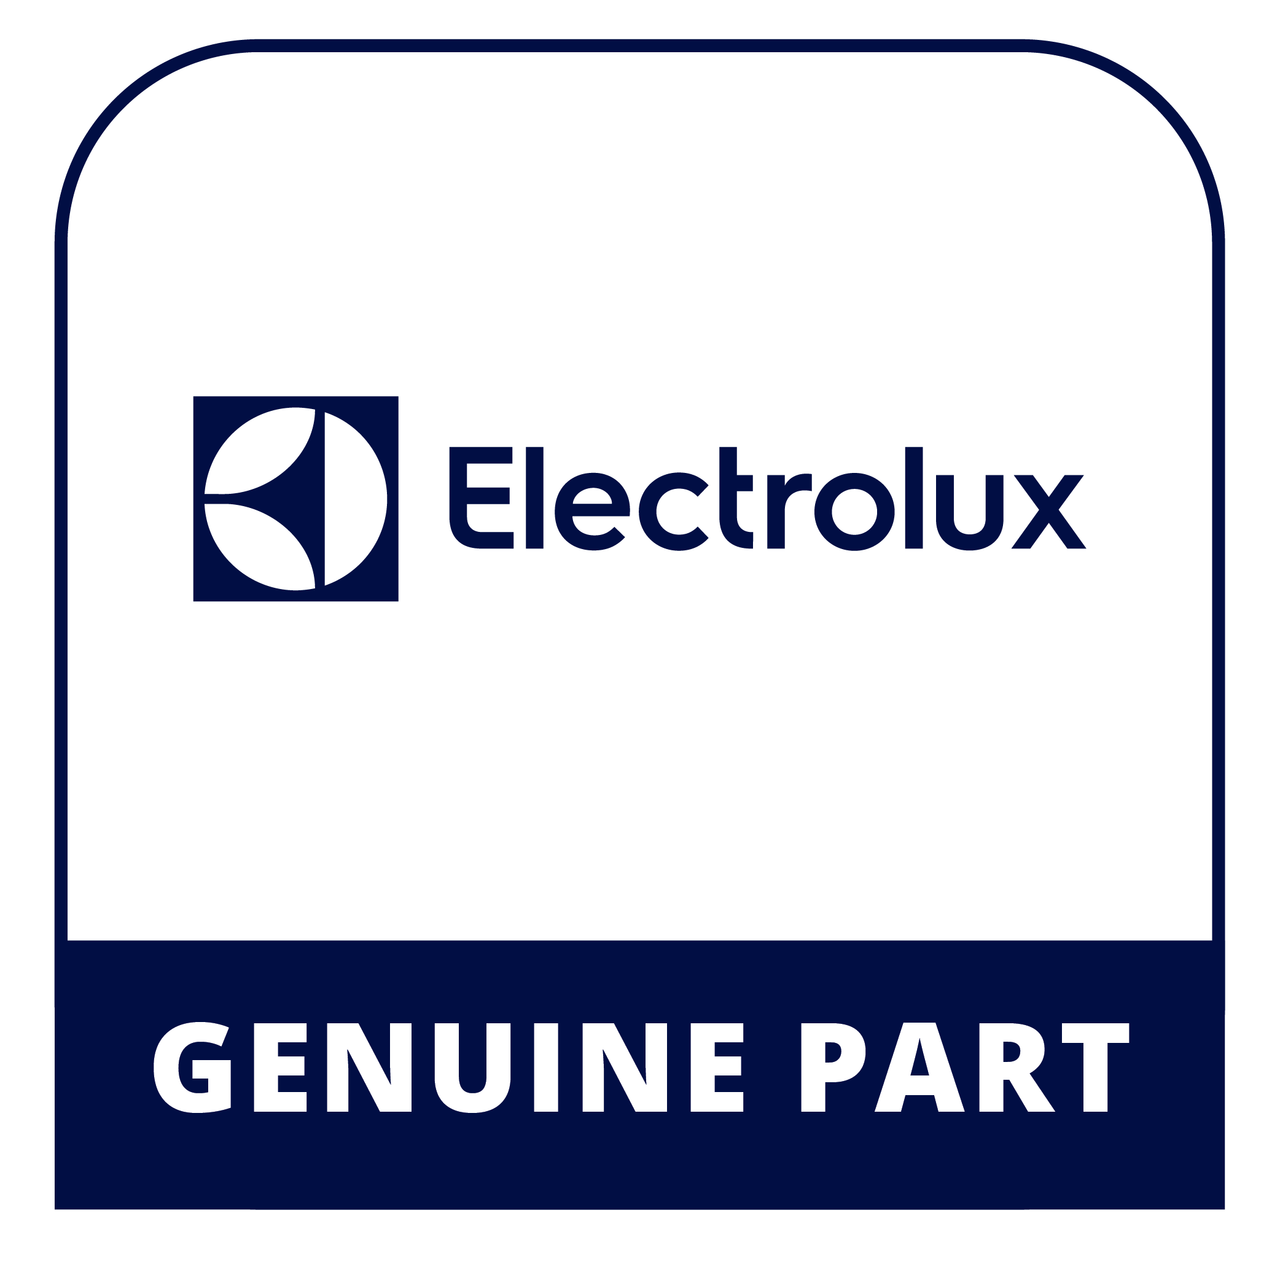 Frigidaire - Electrolux 318298410 Bracket - Genuine Electrolux Part